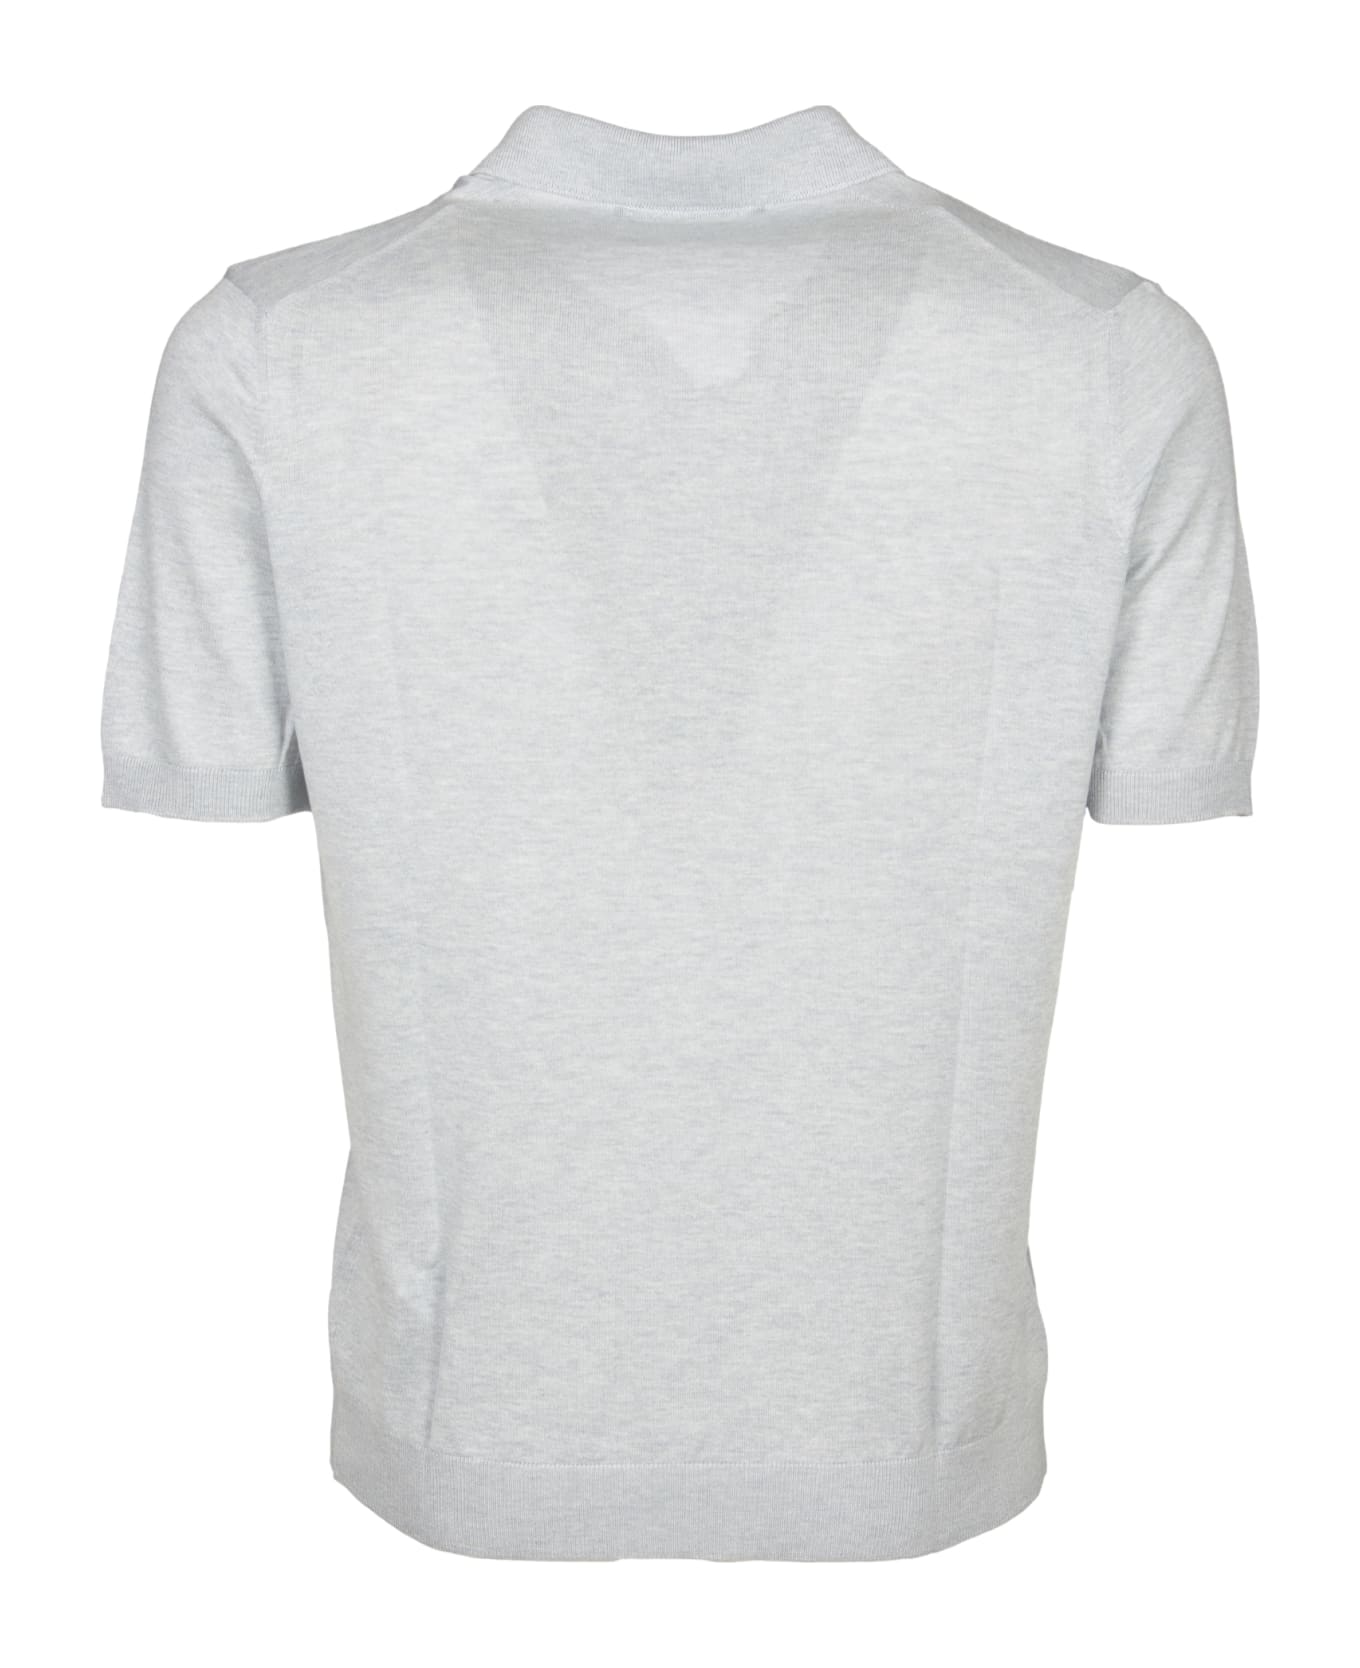 Tagliatore Polo Shirt - Grey ポロシャツ